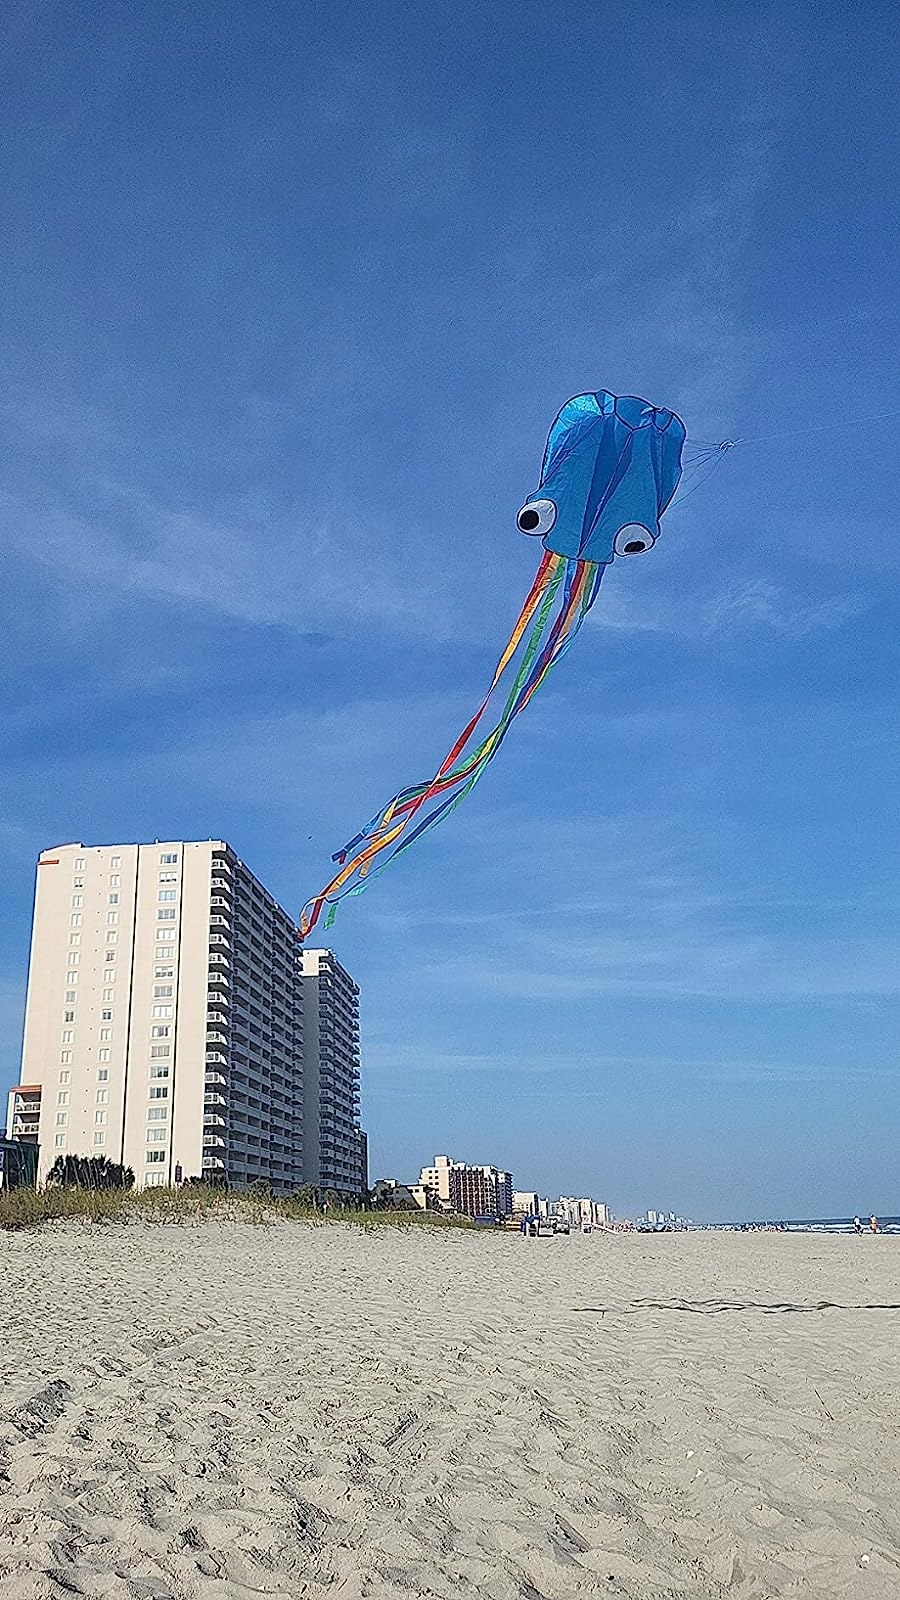 Octopus kite flying on the beach